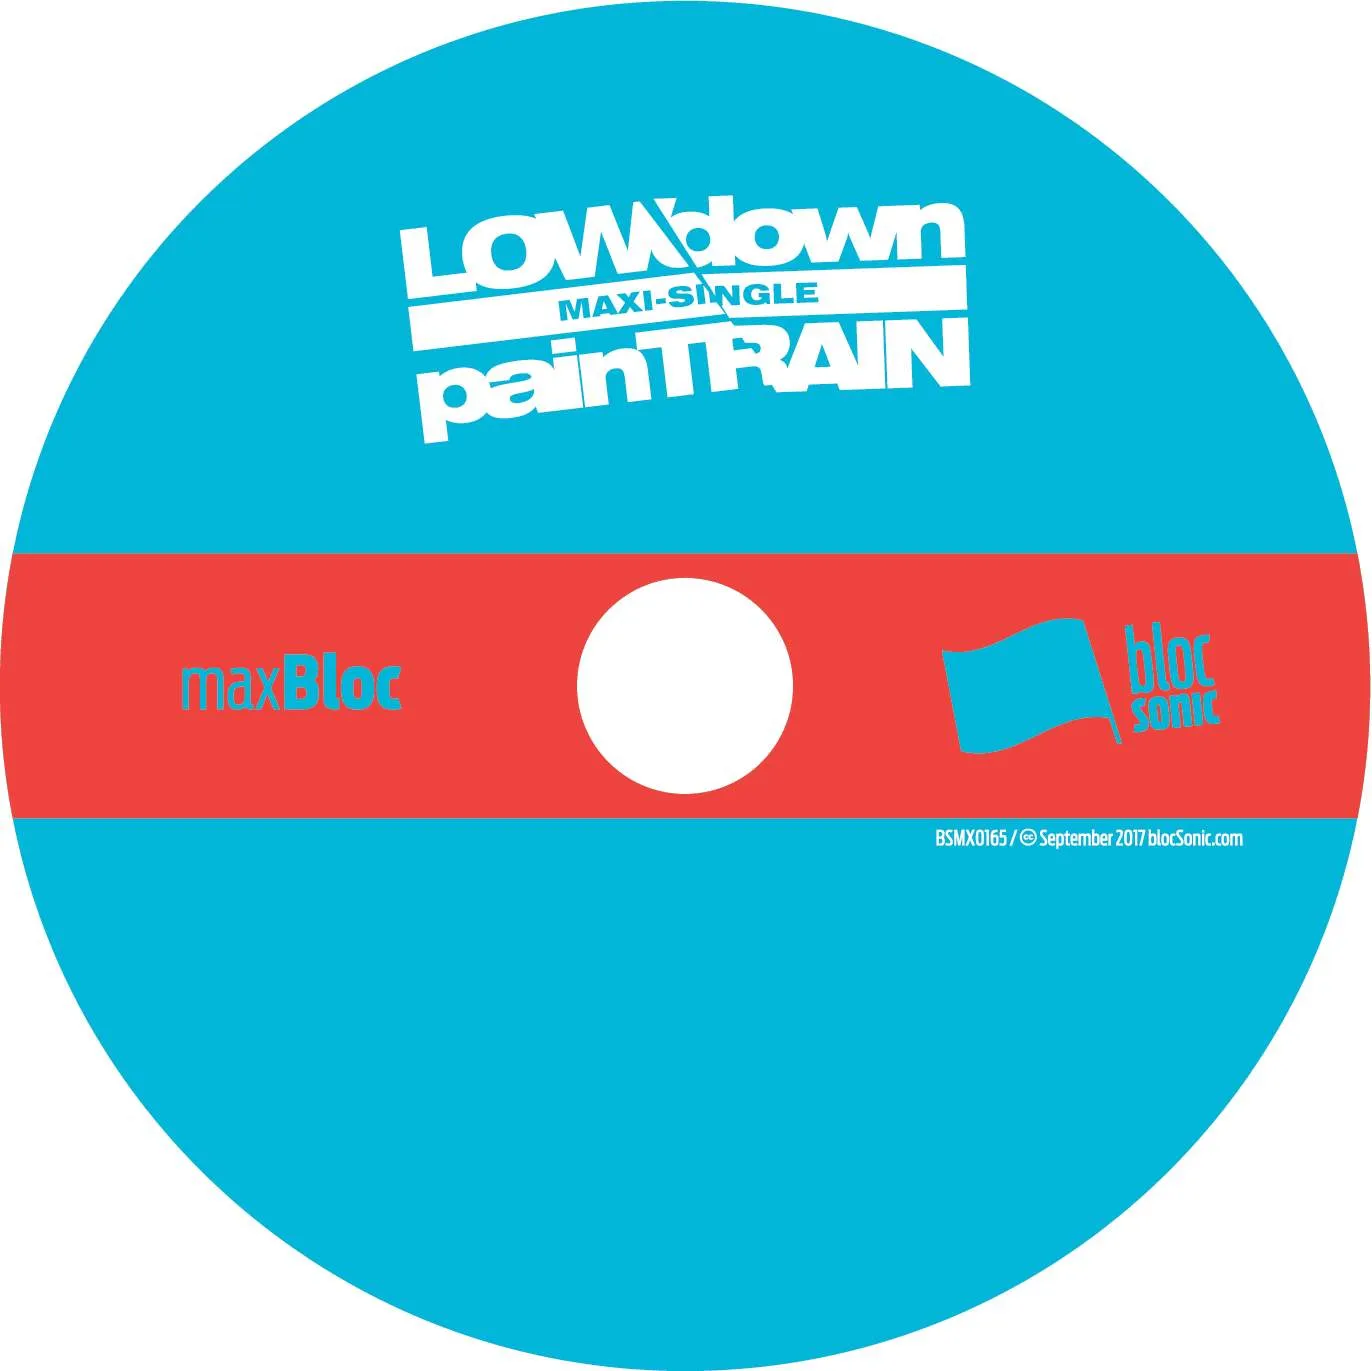 Album disc for “painTRAIN” by LOWdown